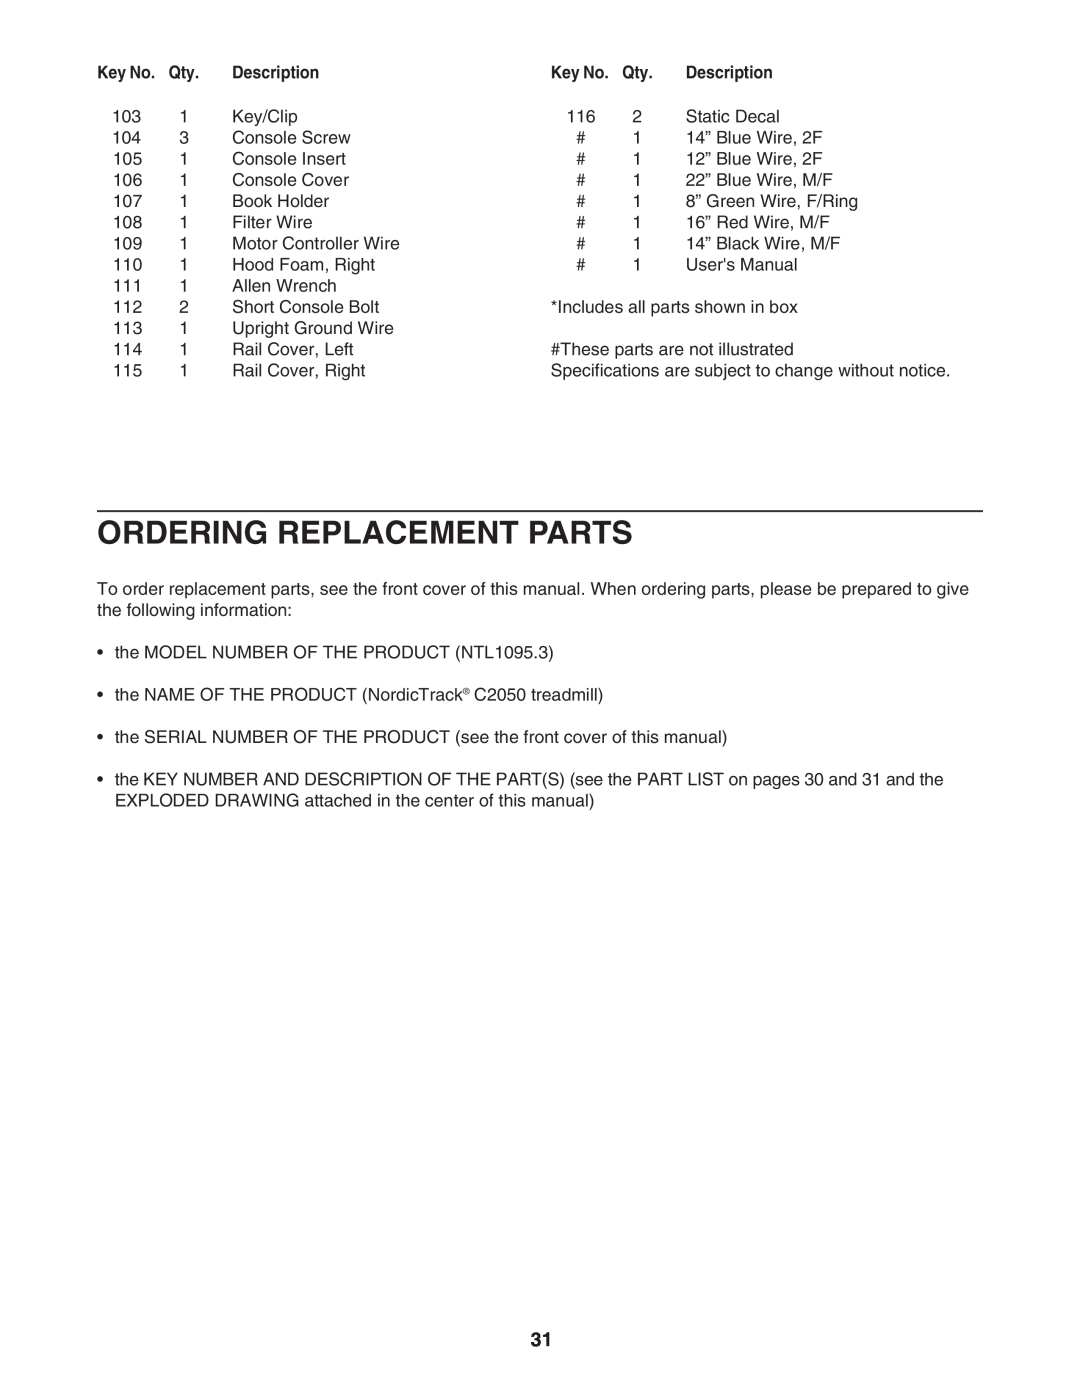 NordicTrack NTL1095.3 user manual Ordering Replacement Parts, Description 